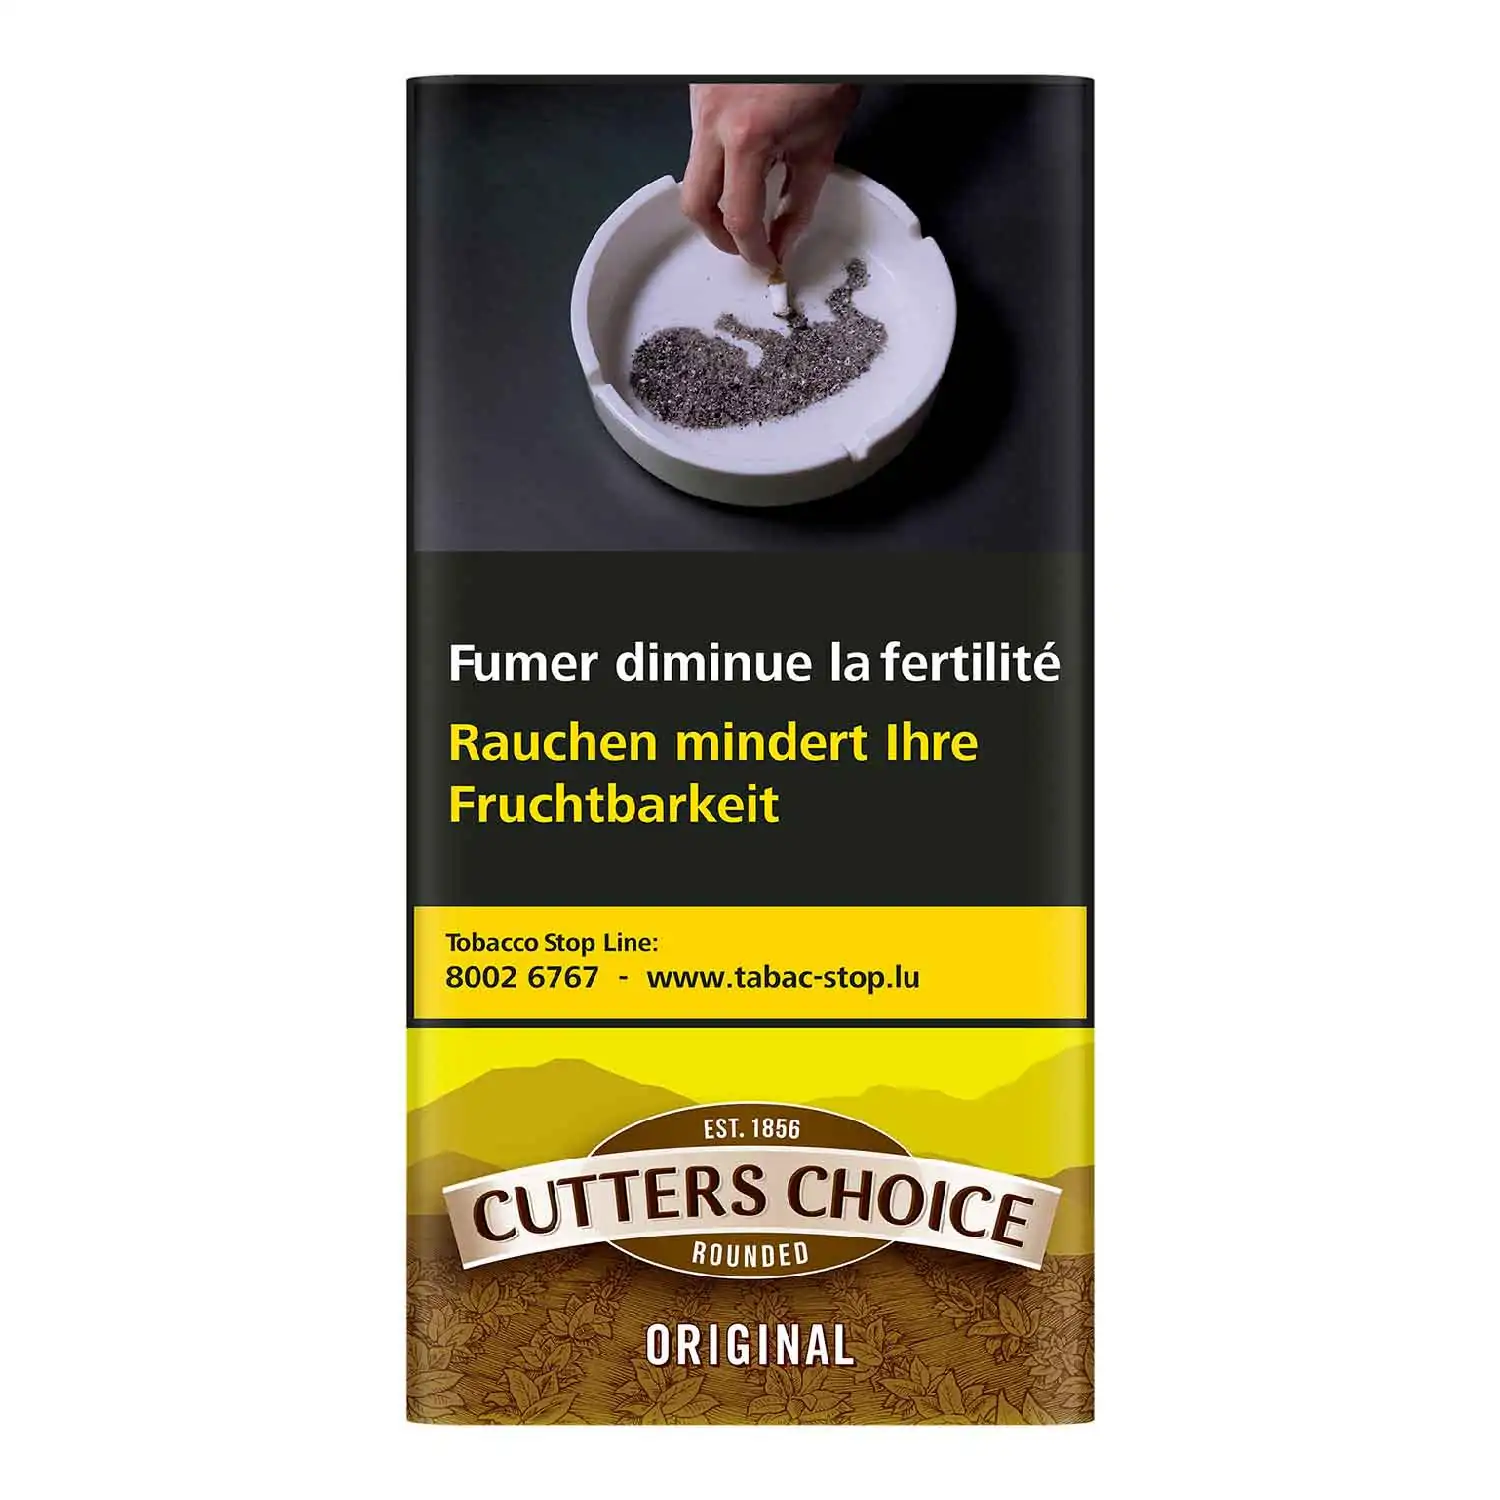 Cutters Choice original 50g - Buy at Real Tobacco